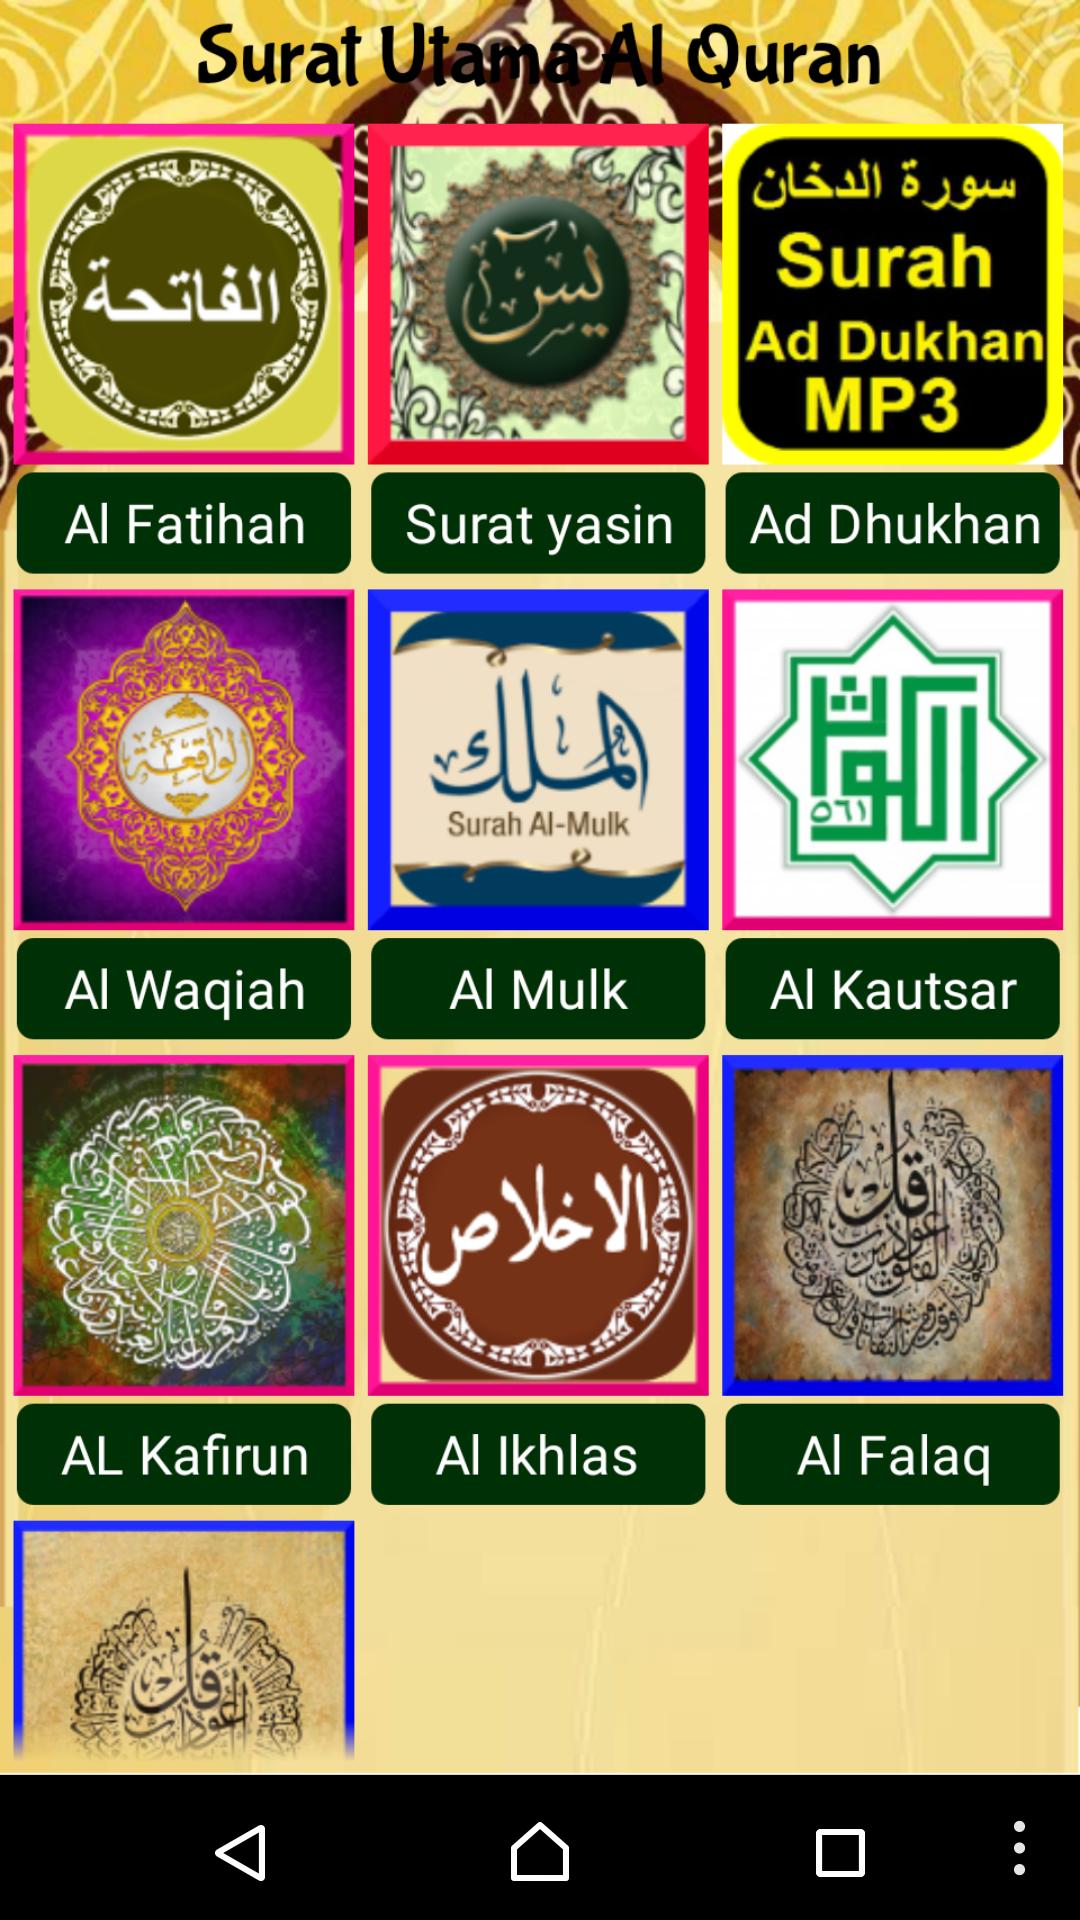 Surat Utama Al Quran For Android Apk Download